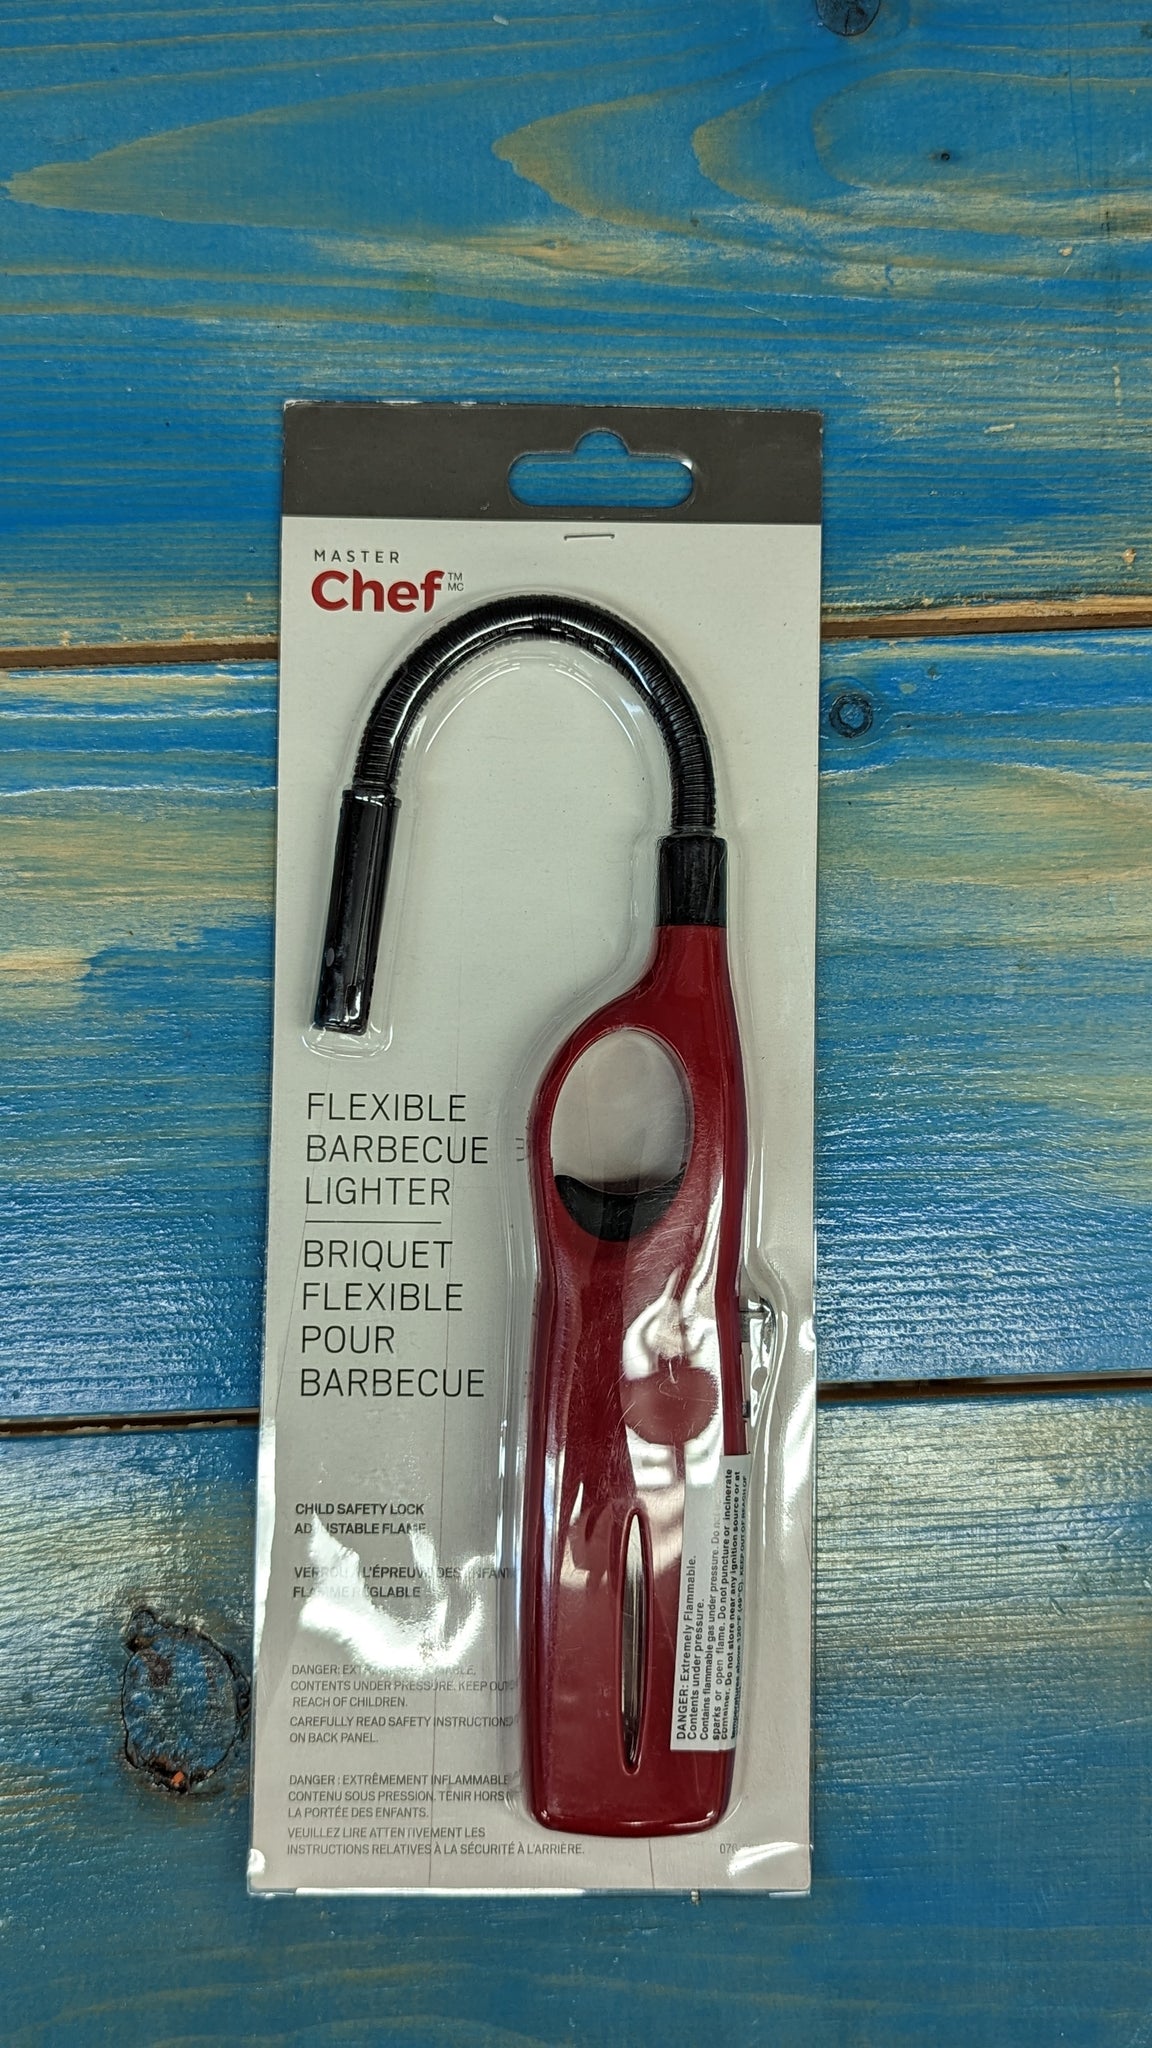 MASTER Chef Flex BBQ Lighter with Adjustable Flame & Child Safety Lock